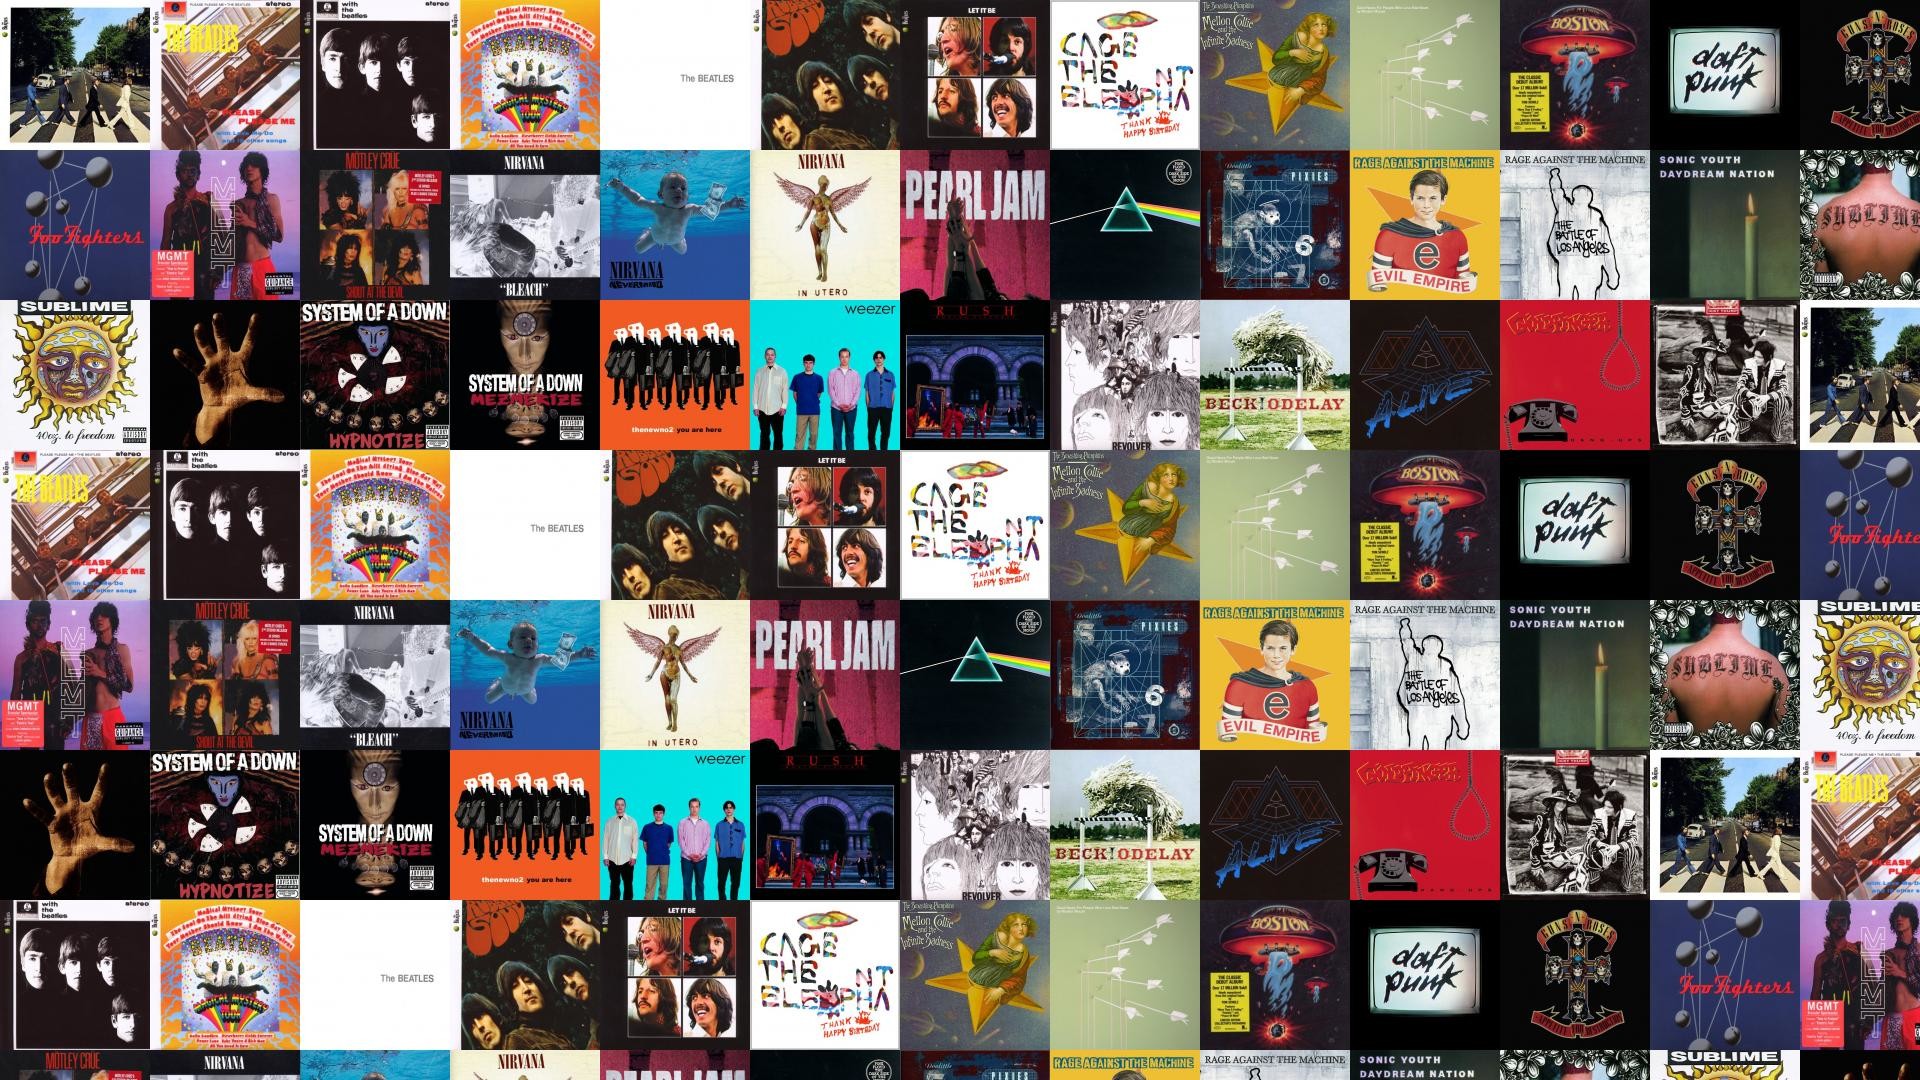 Rush Album Covers Wallpaper 64 Images